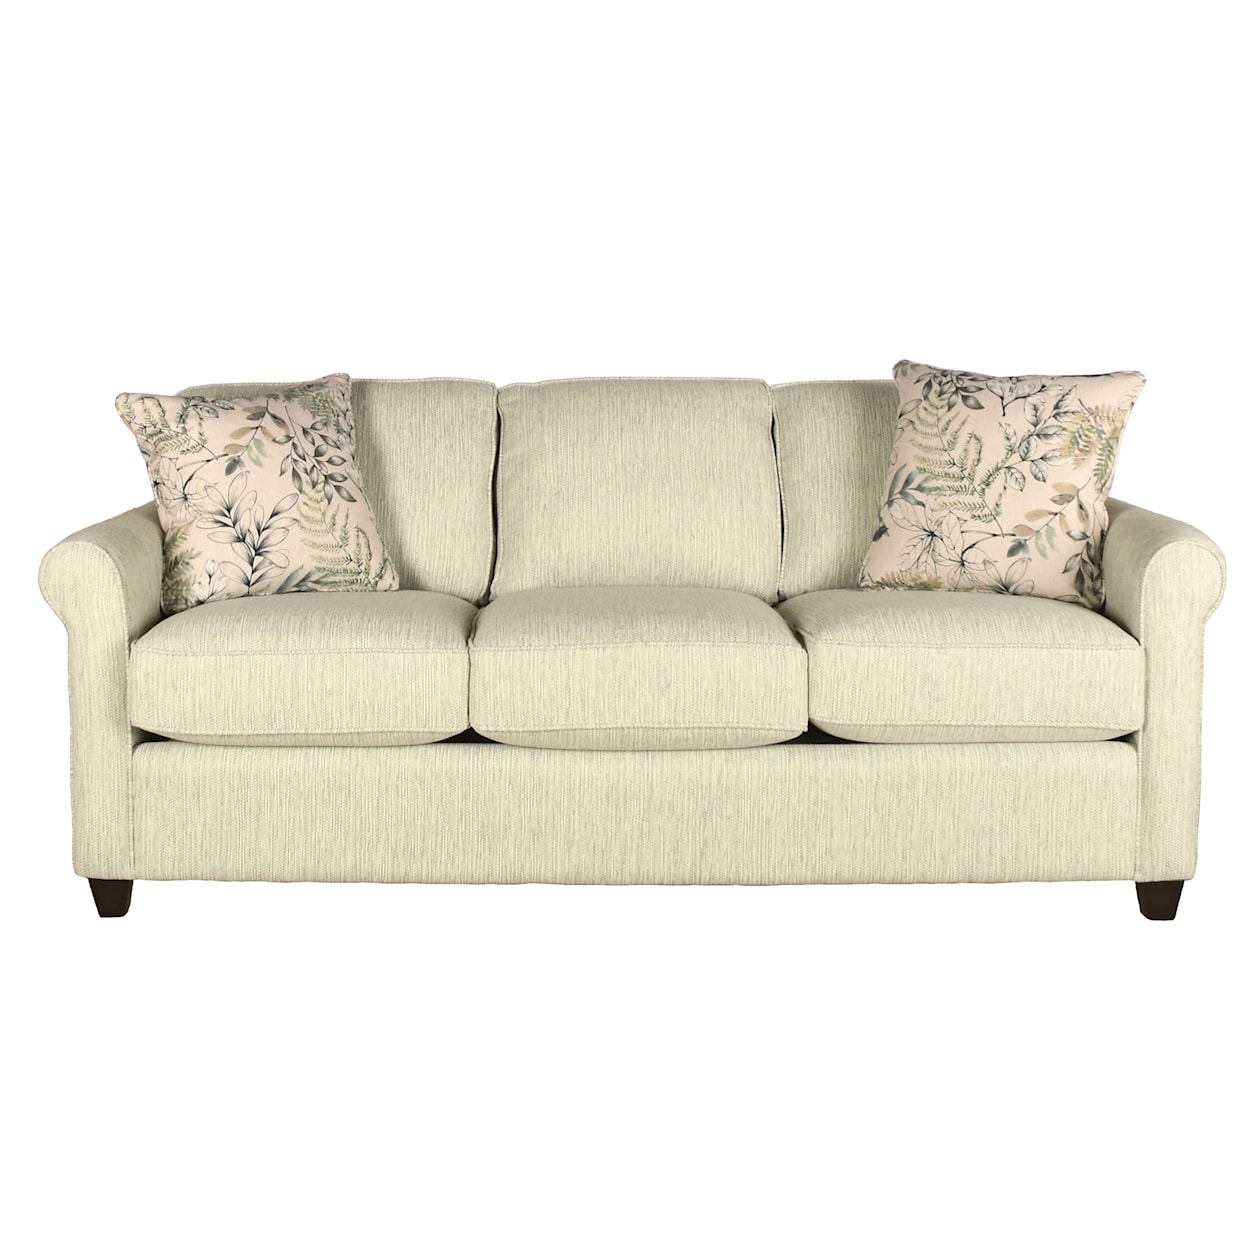 Taelor Designs Denzel Sofa